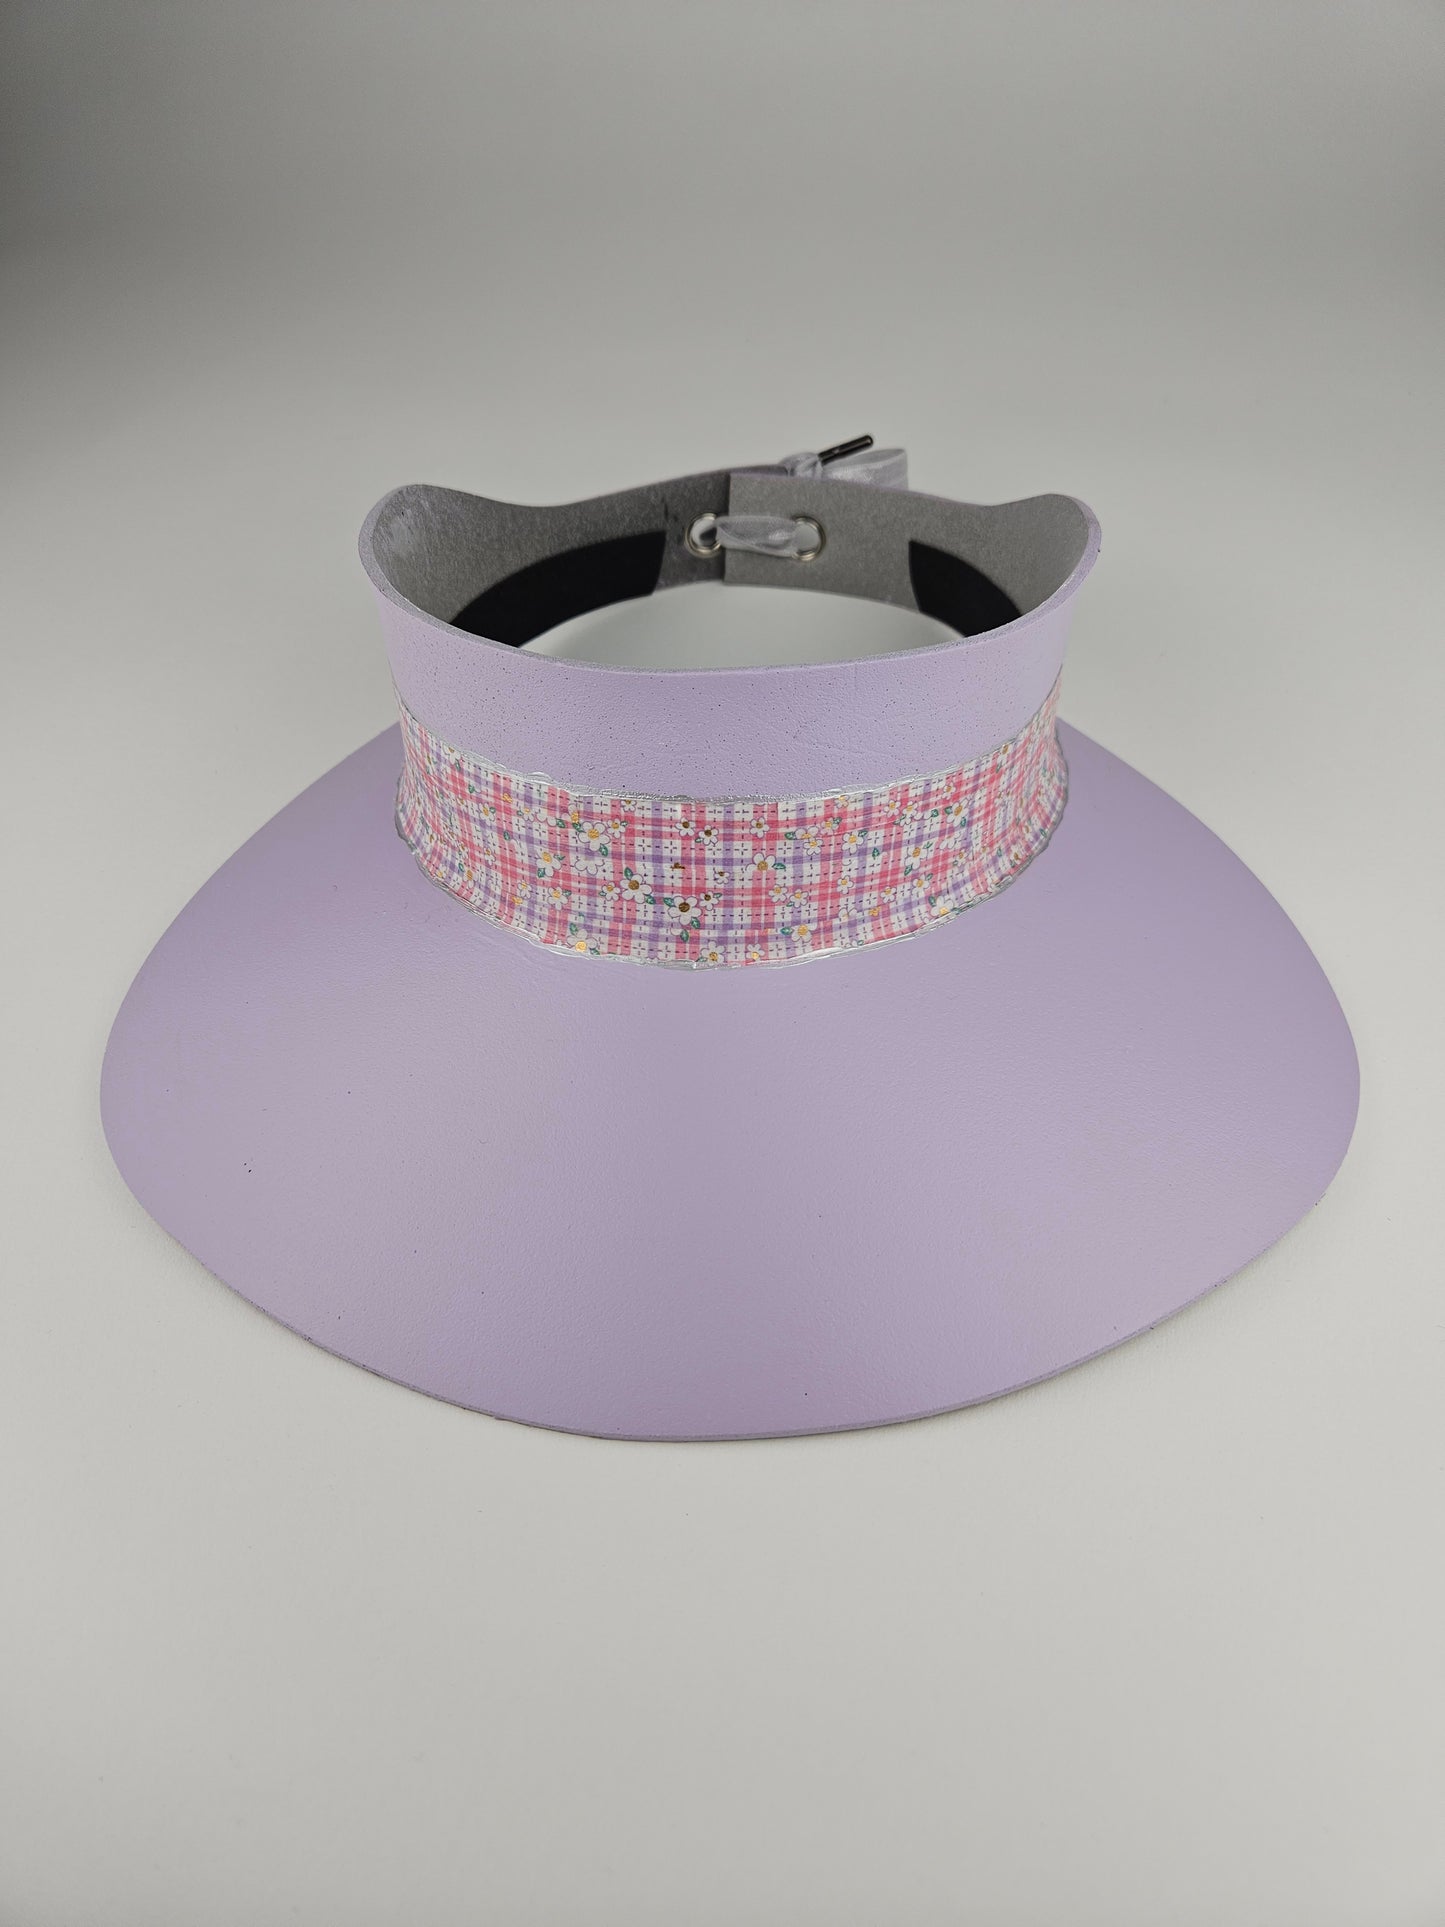 Lilac Purple Audrey Sun Visor Hat with Cute Multicolor Pastel Plaid Style Band: 1950s, Walks, Brunch, Asian, Golf, Summer, Church, No Headache, Pool, Beach